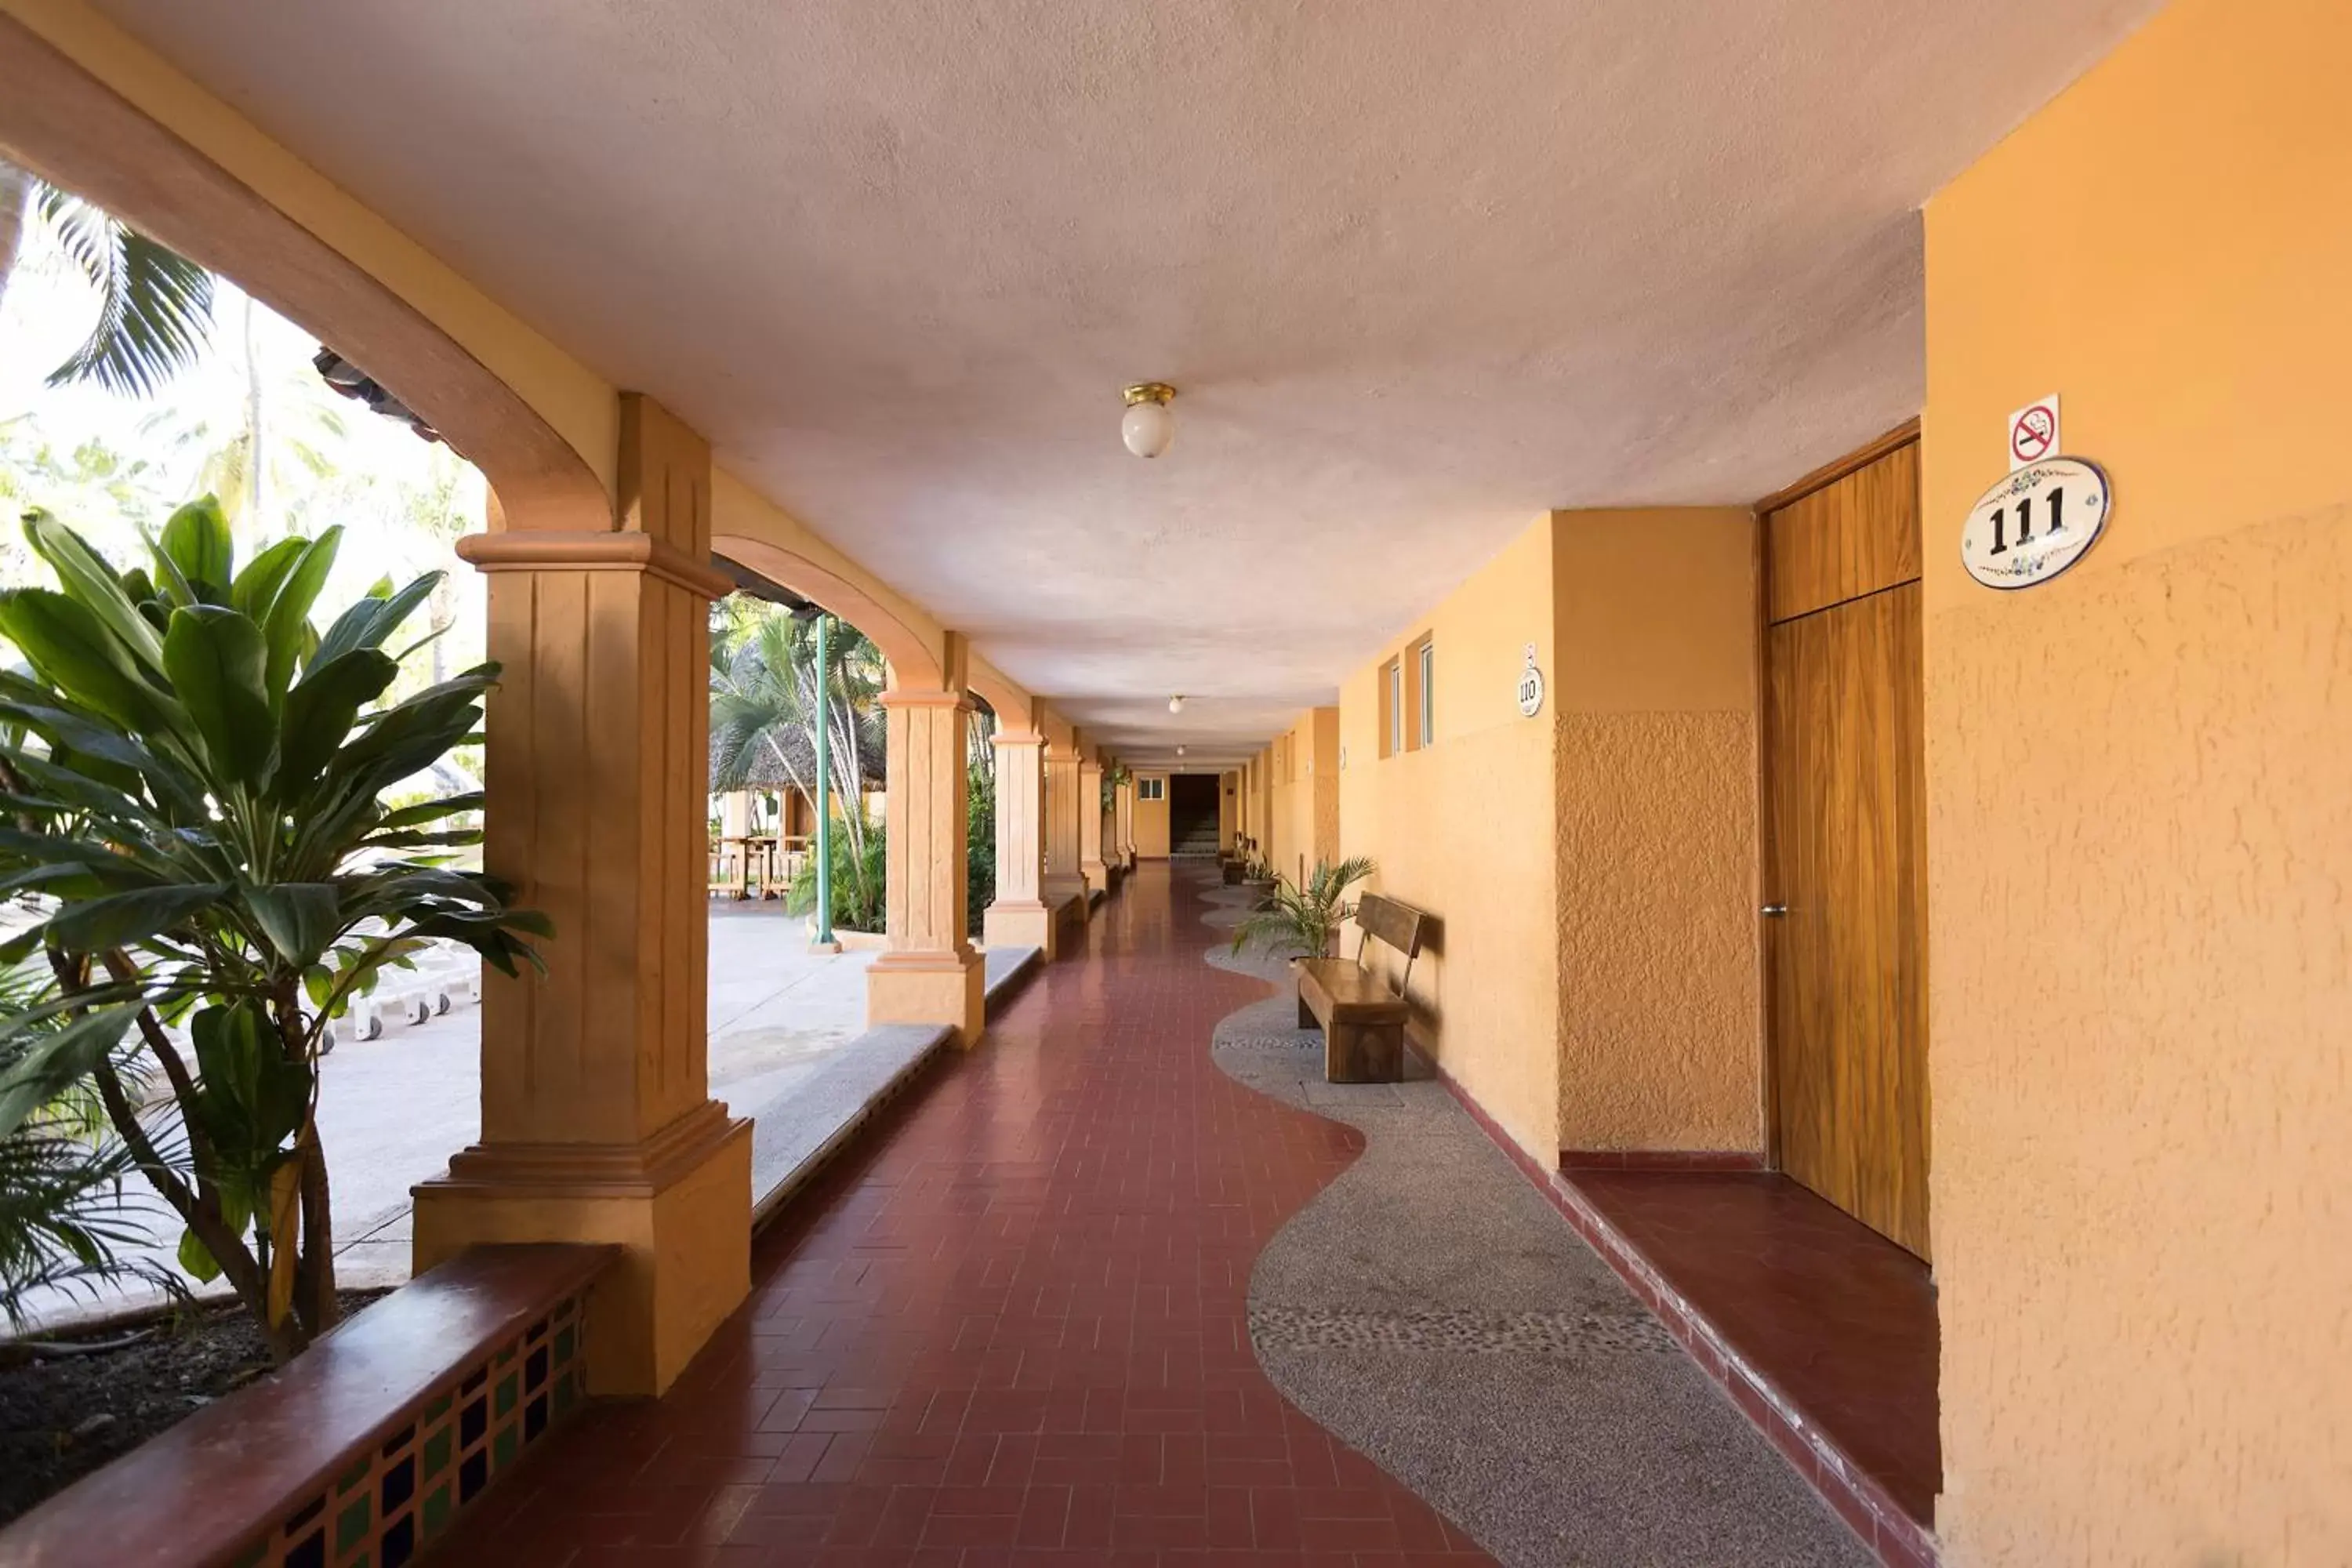 Area and facilities in Hotel Margaritas